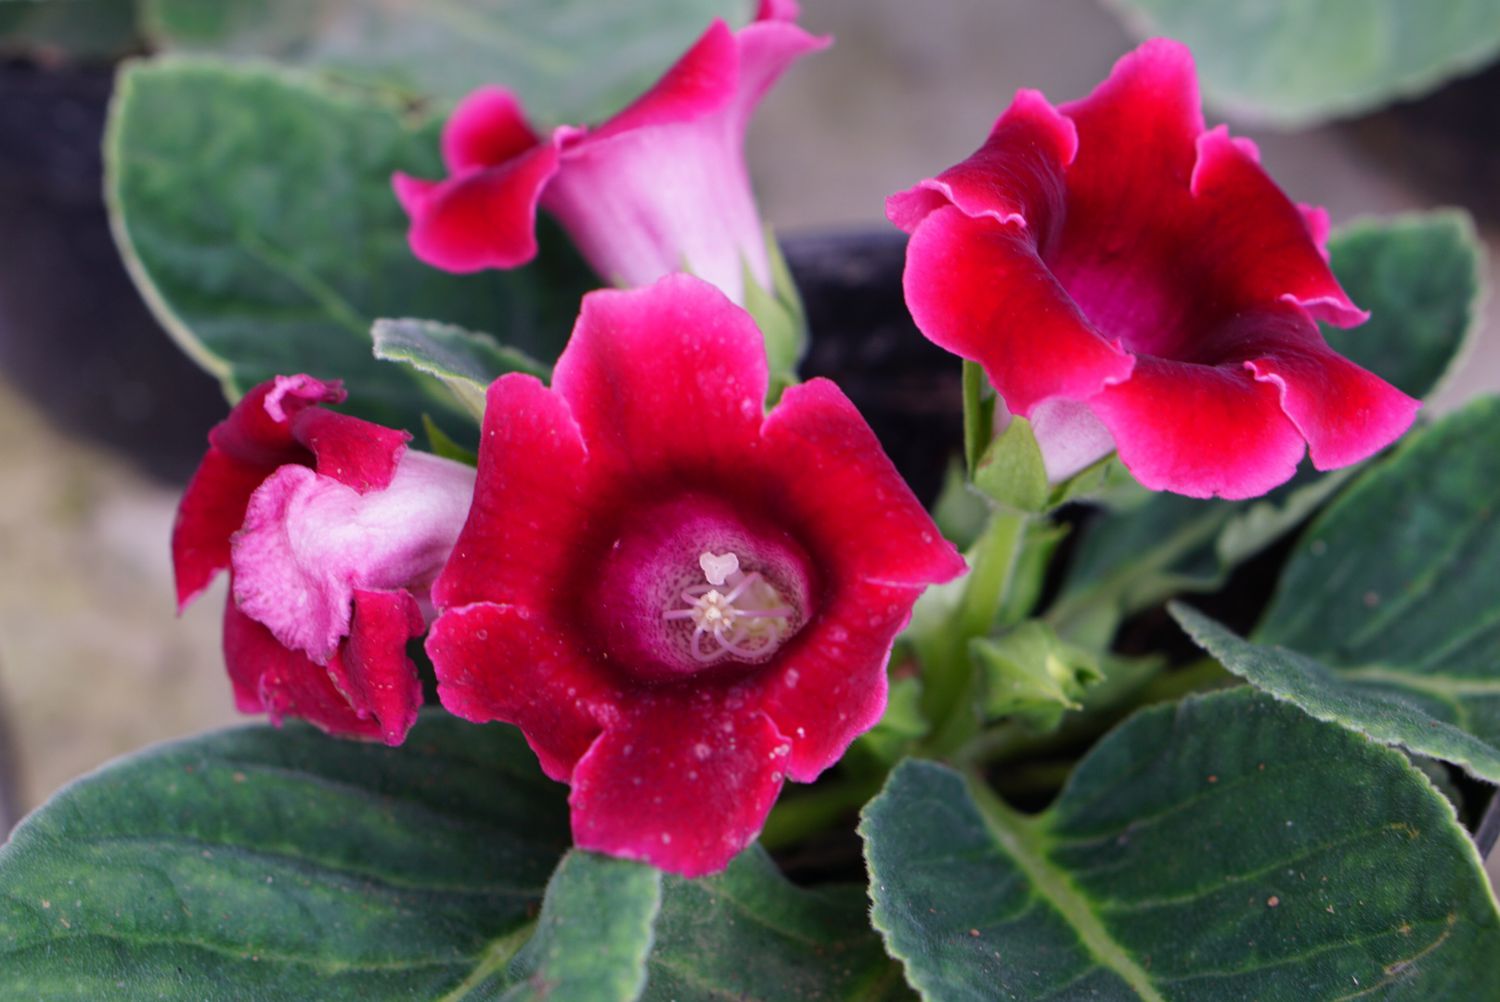 Gloxinia senningia-Hybridpflanze mit roten trompetenförmigen Blüten in Nahaufnahme